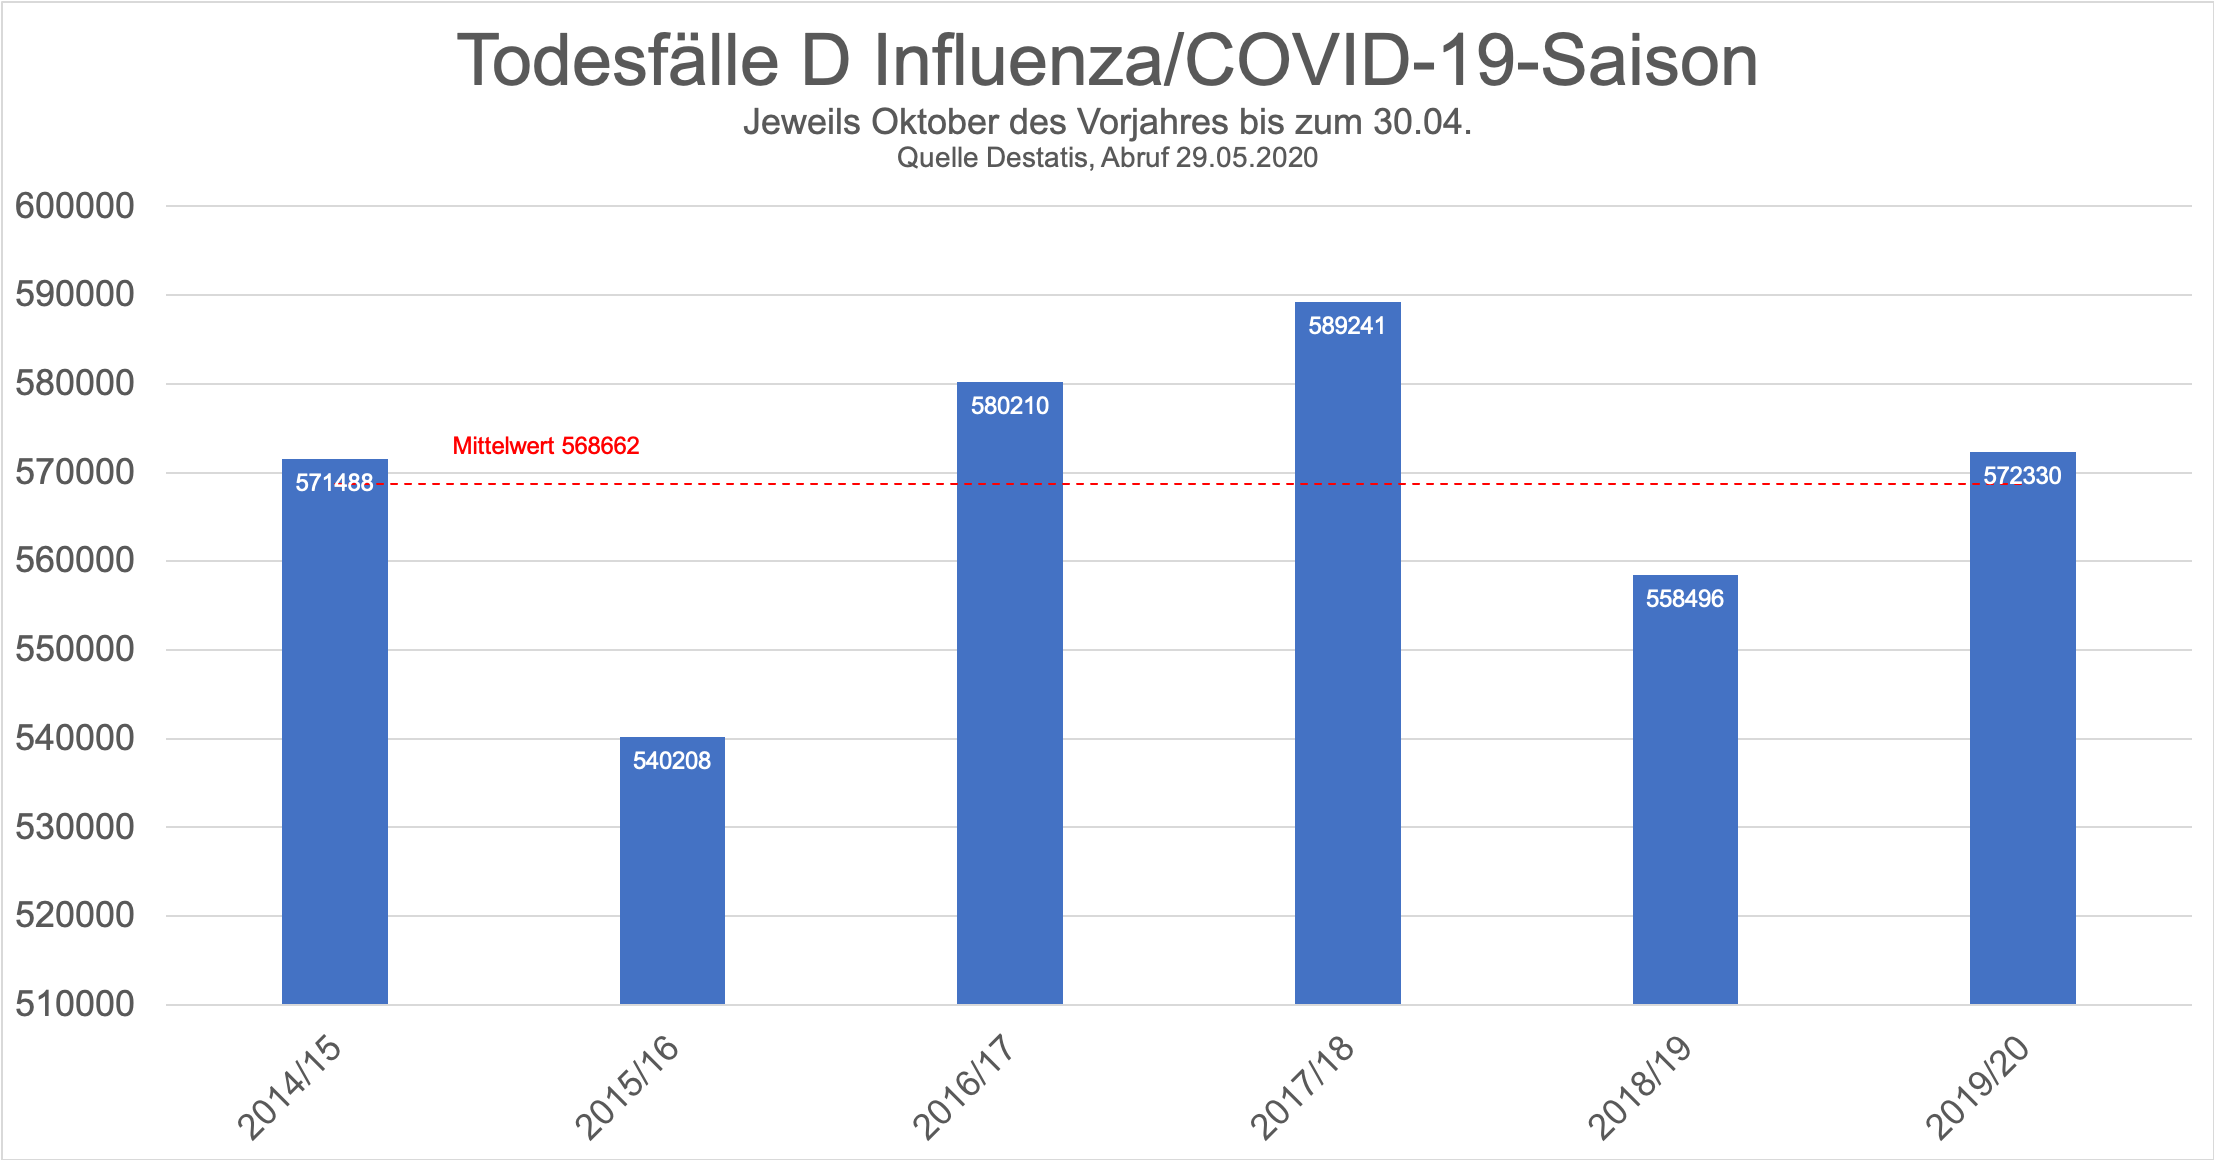 Destatis Todesfaelle Influenza COVID